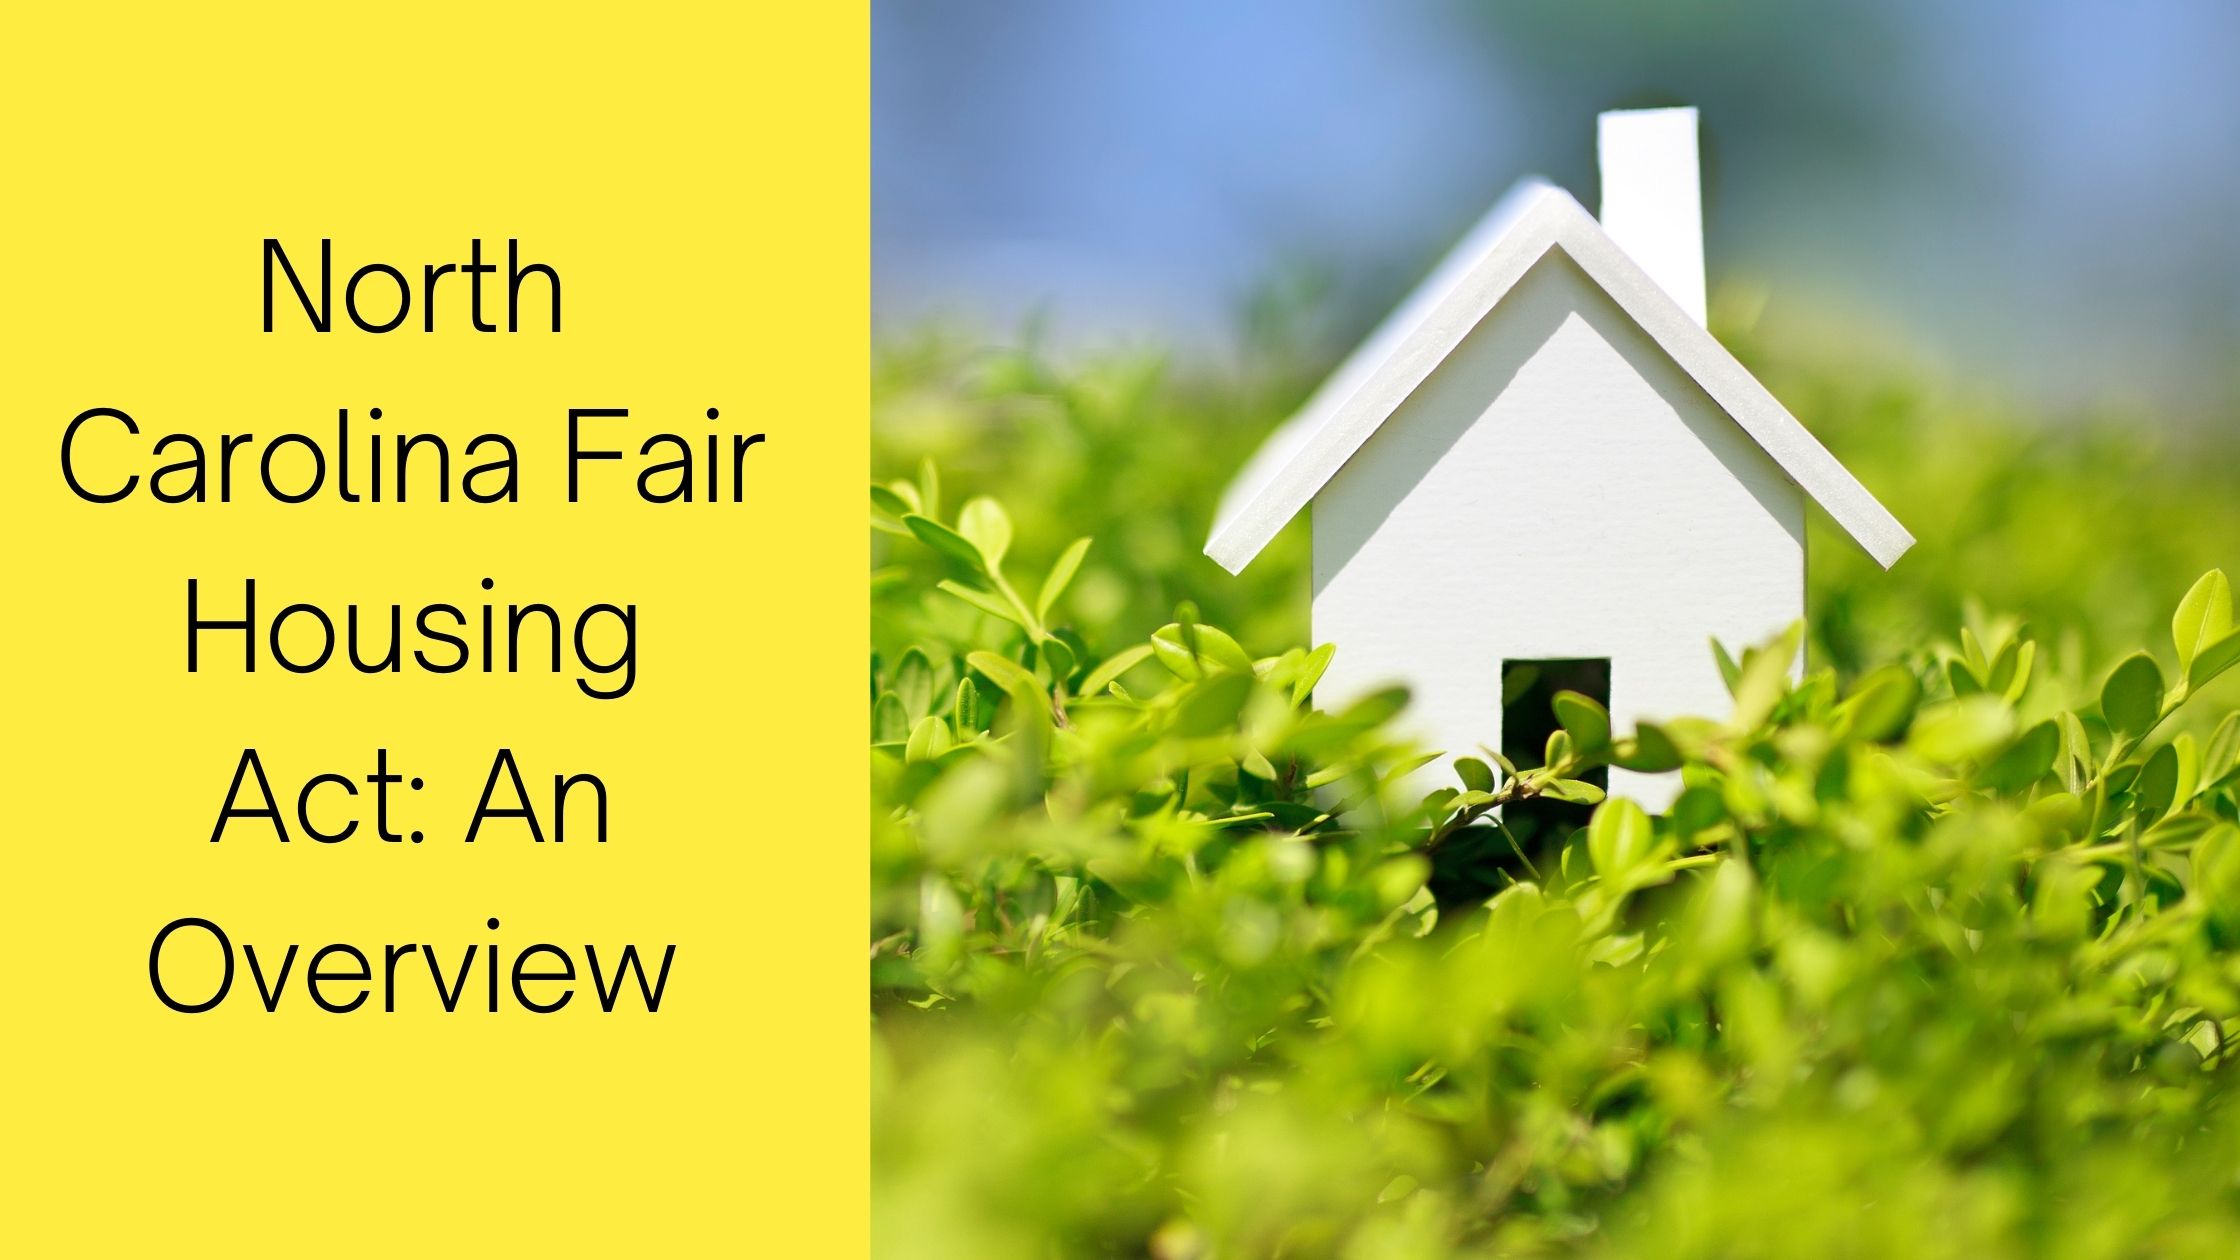 North Carolina Fair Housing Act: An Overview